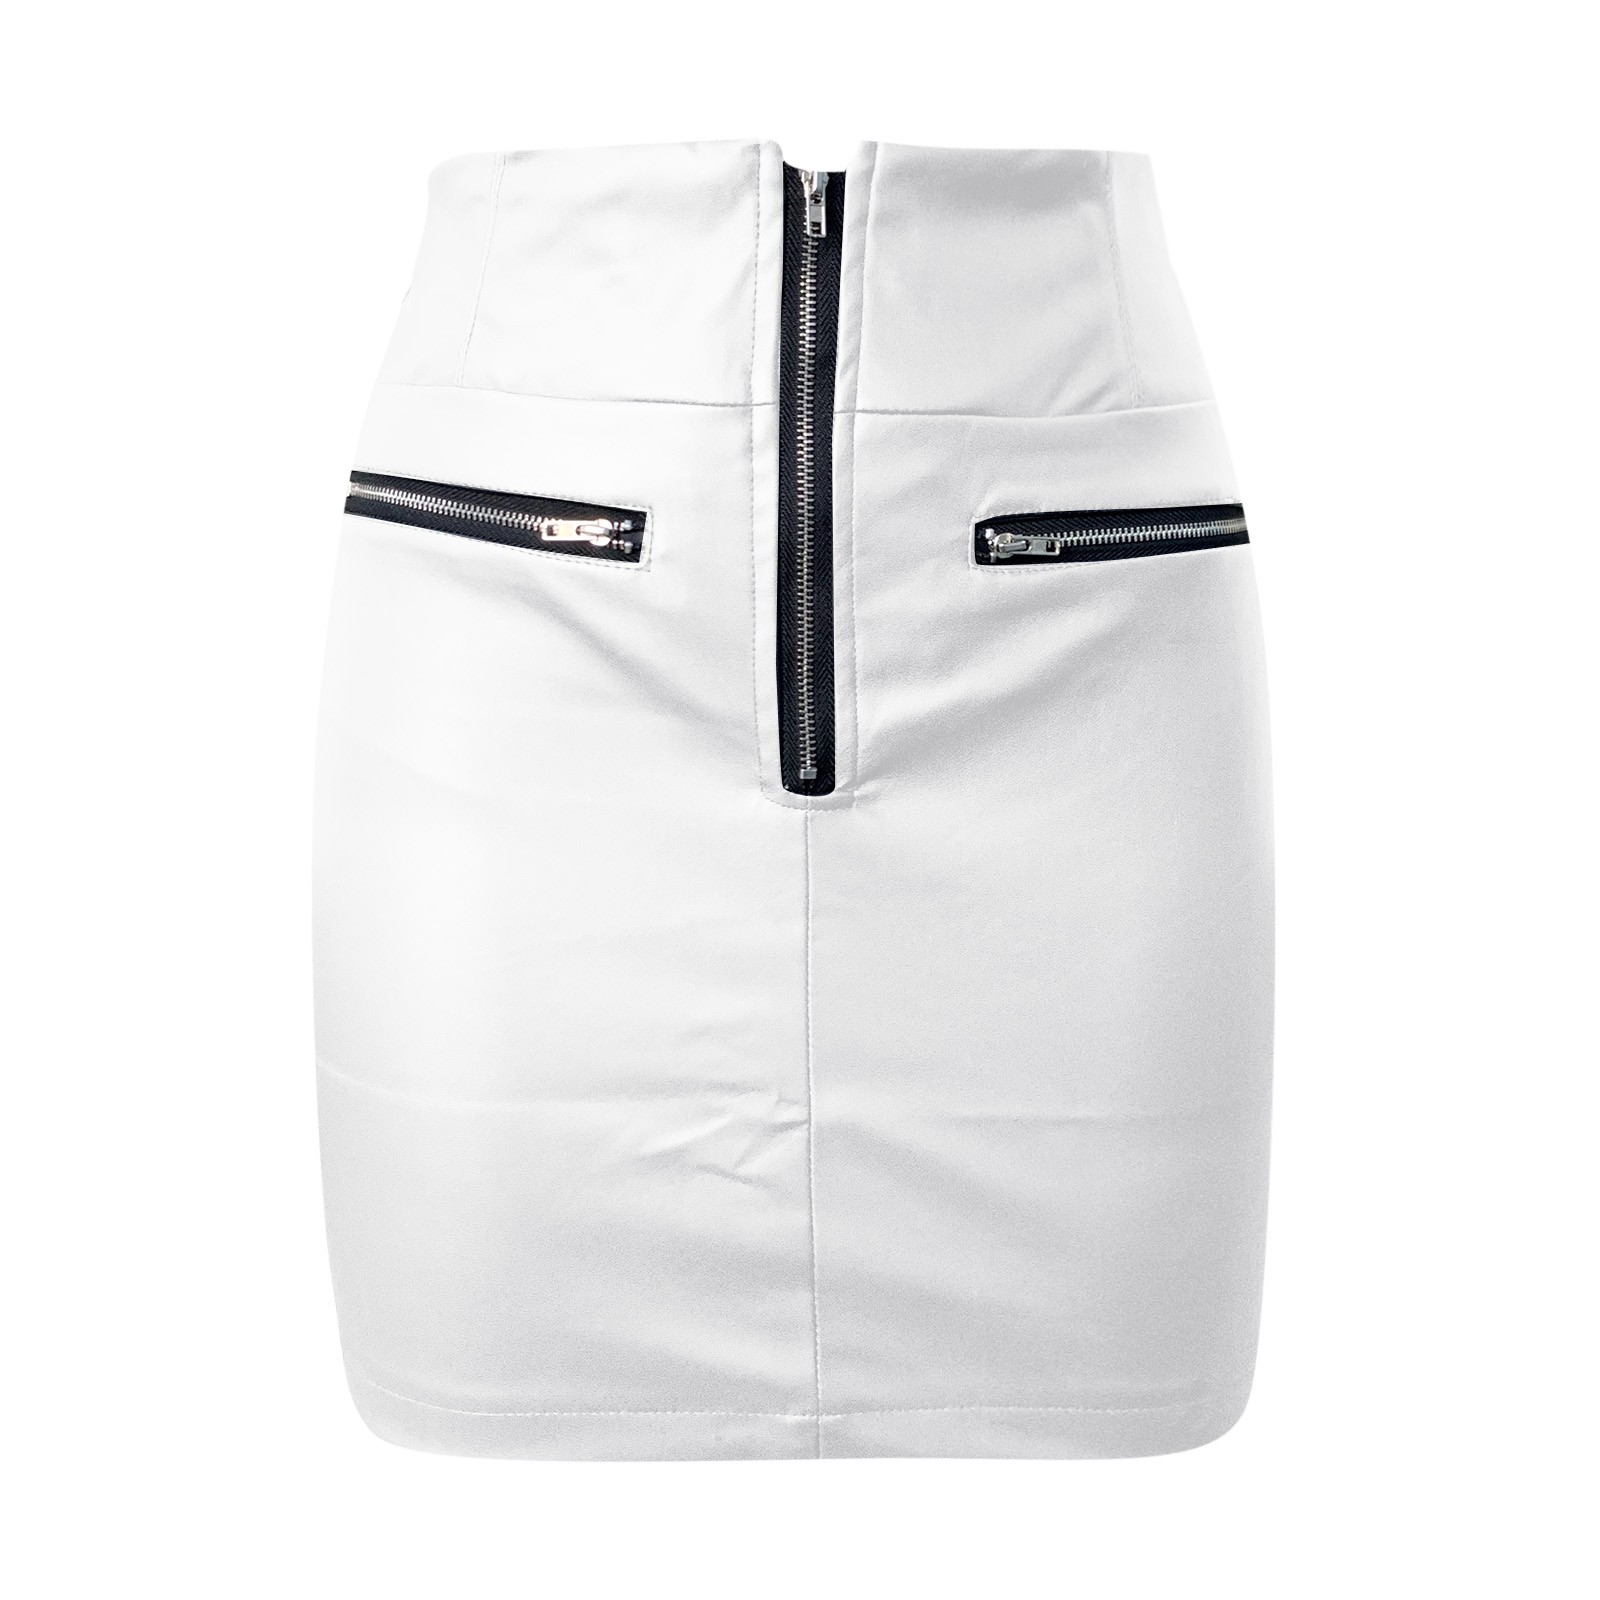 adviicd Skirts For Women Long Length Women's Slim Fit Rayon Knee Length ...